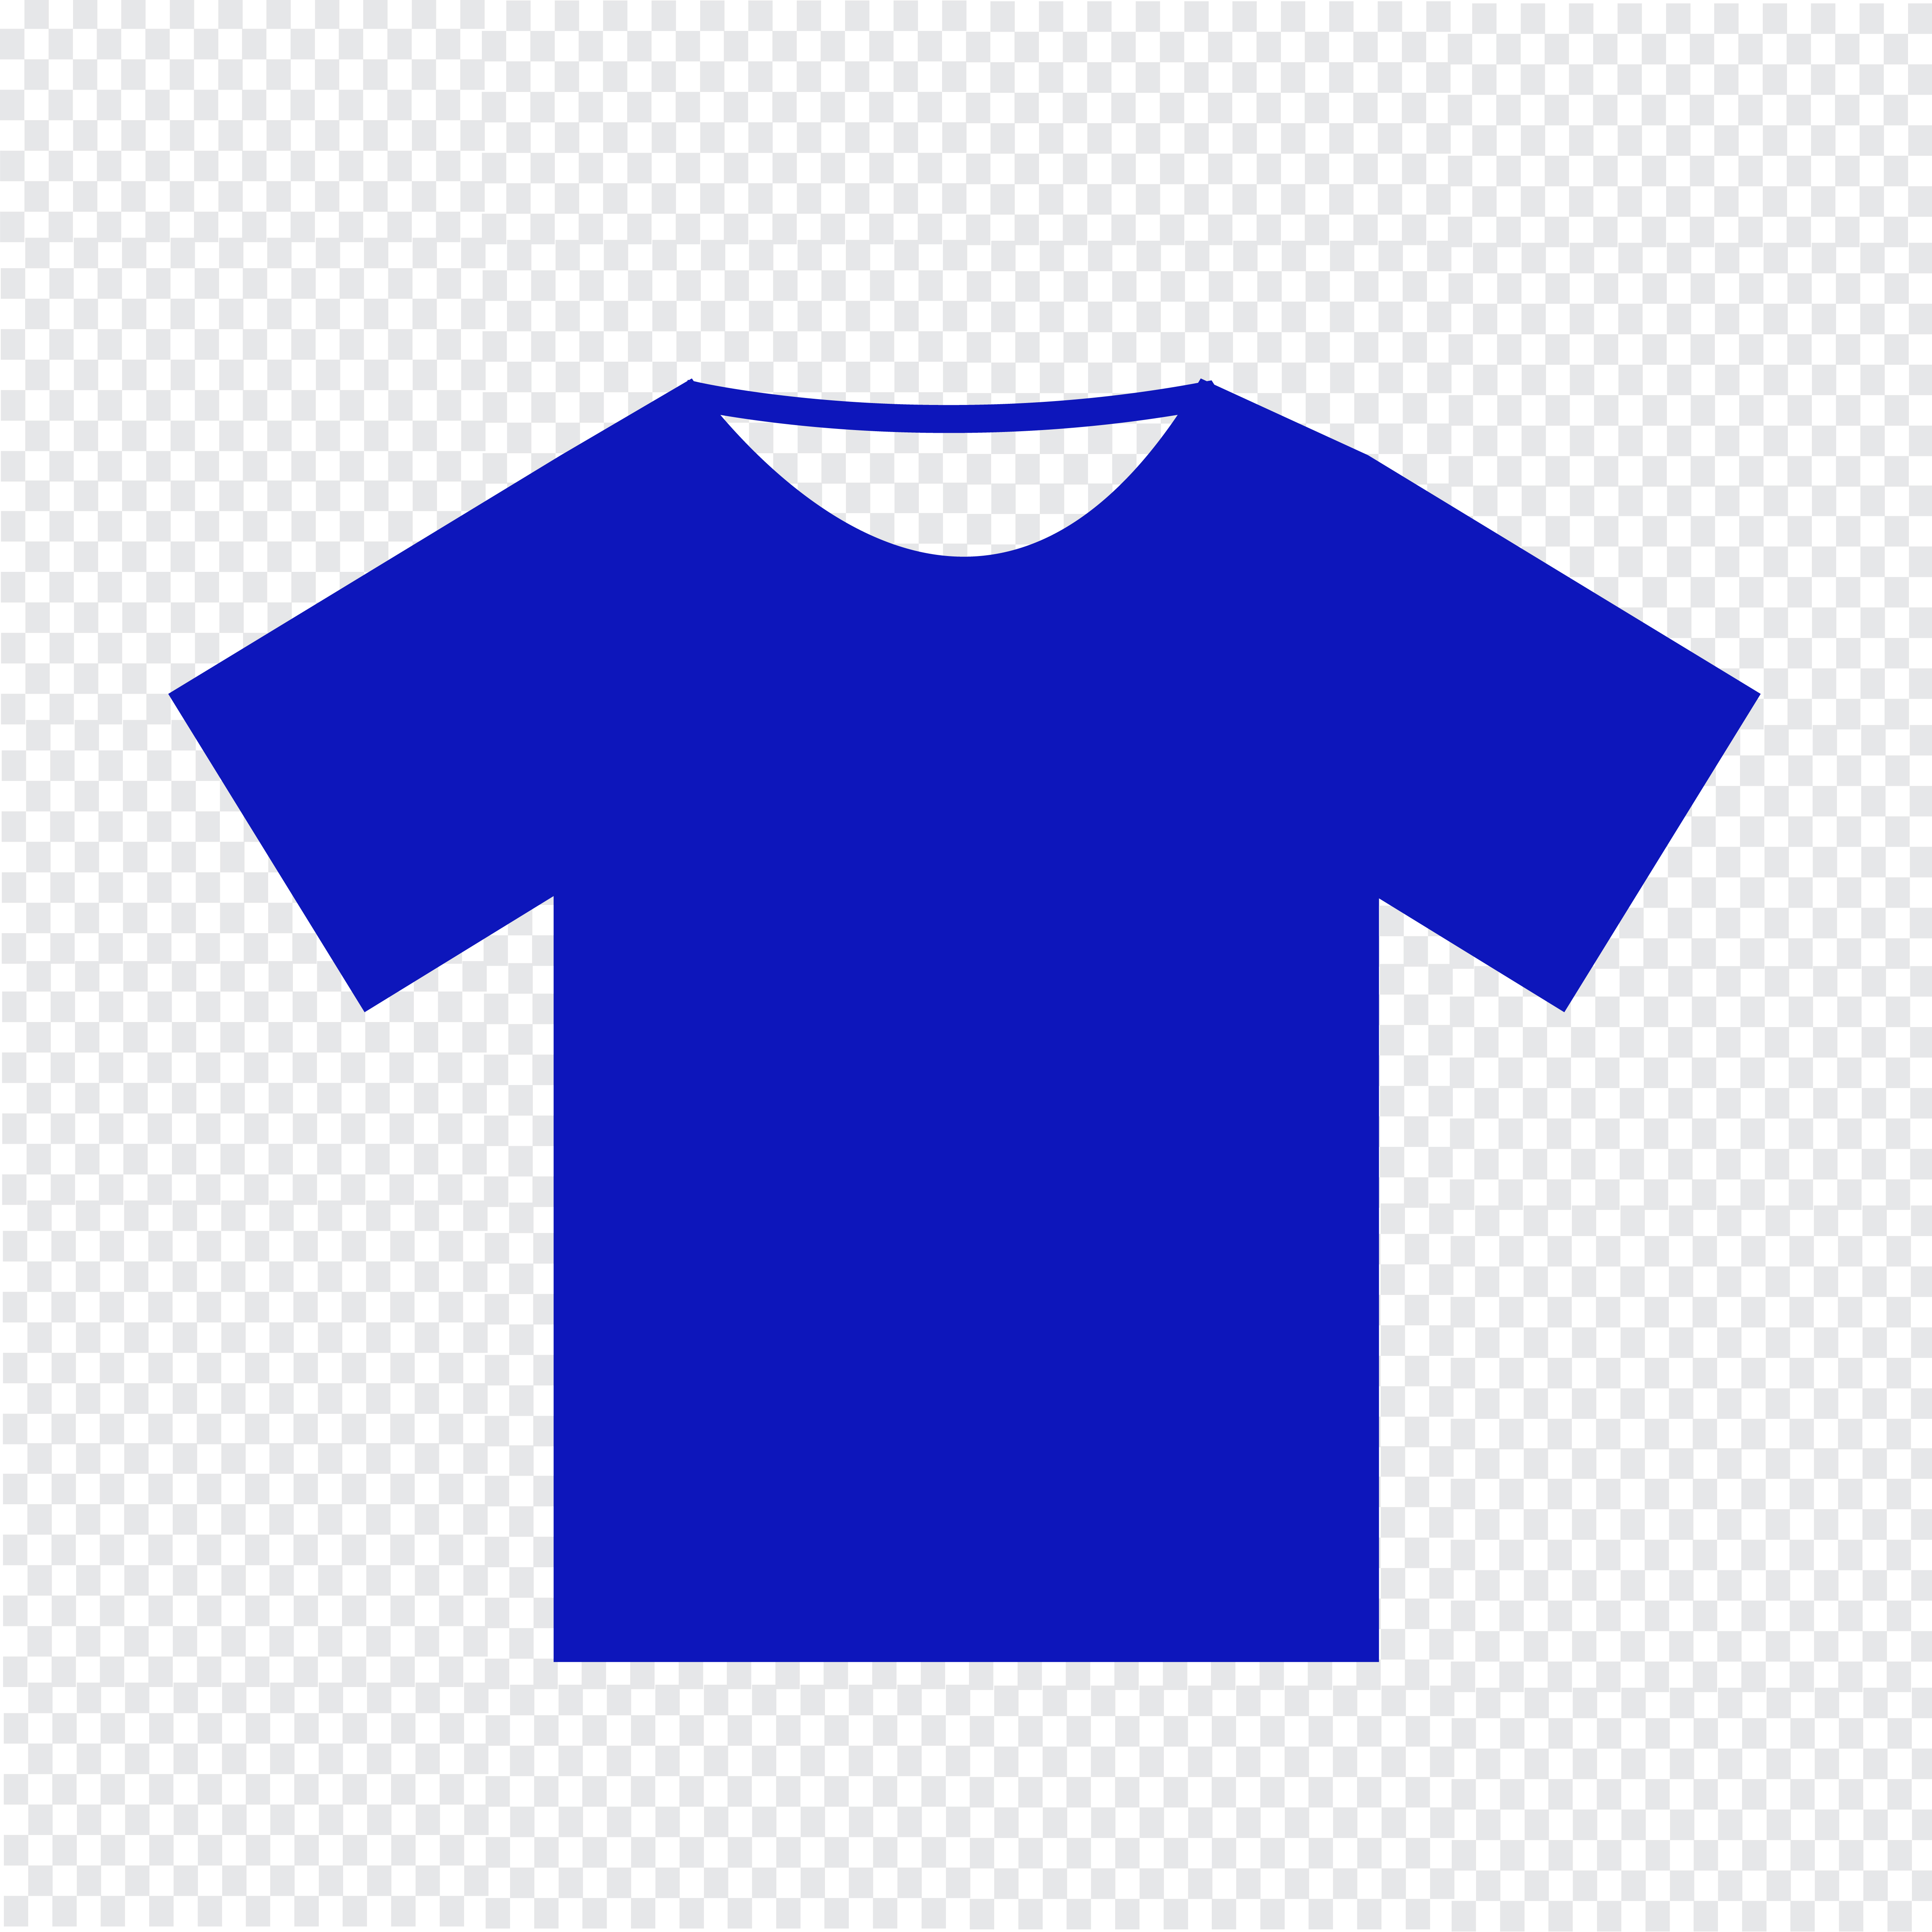 Tshirt icon Vector Illustration Download Free Vectors, Clipart